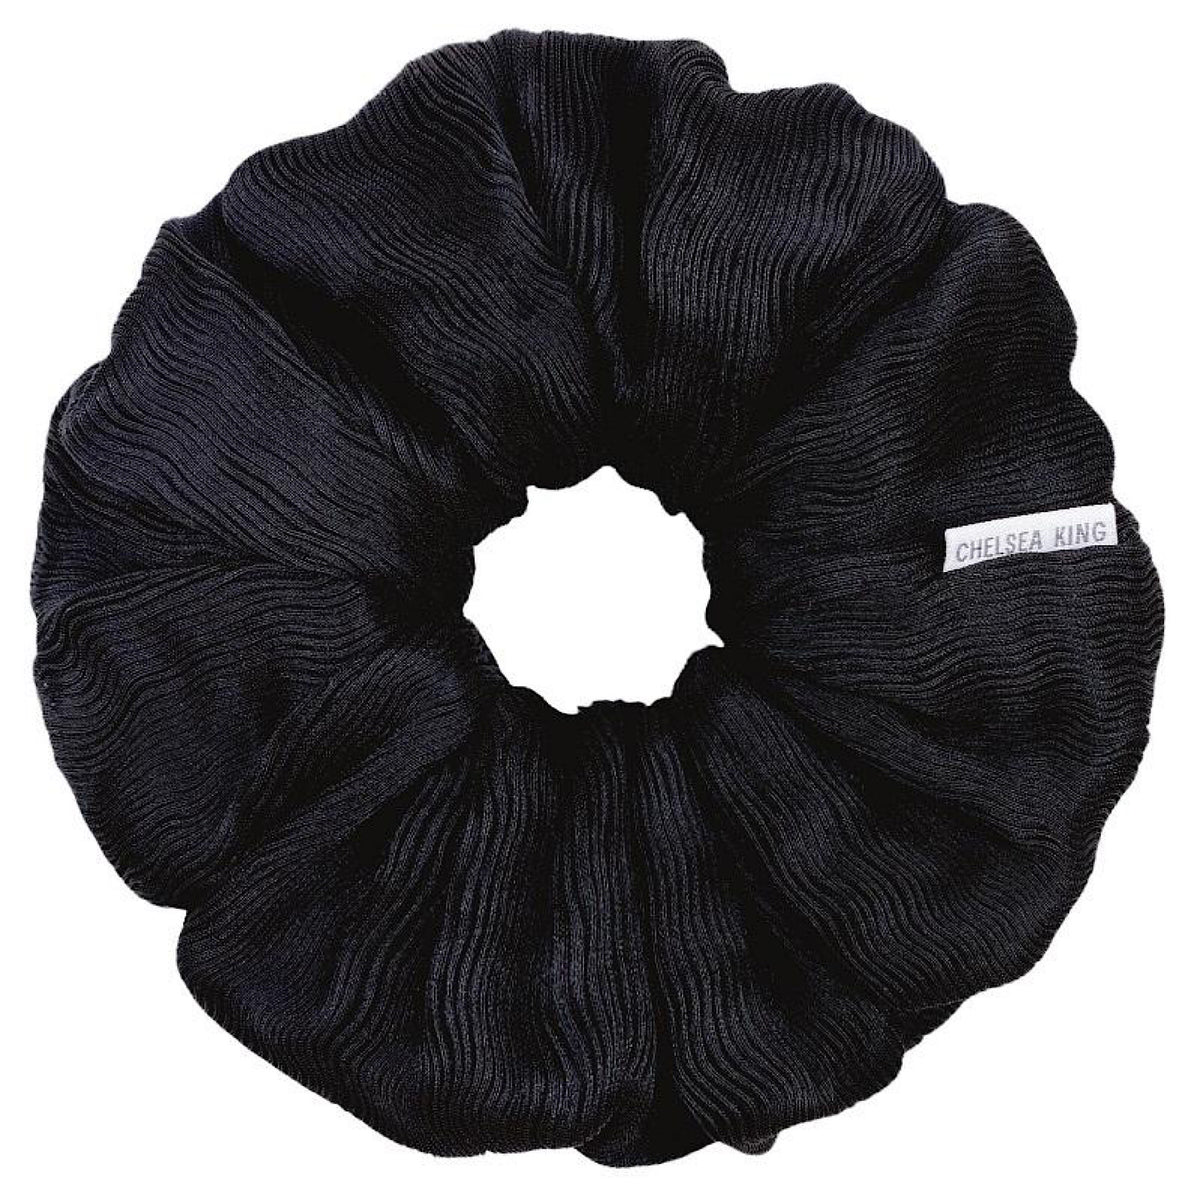 Parella Black Ripple Scrunchie, Oversized